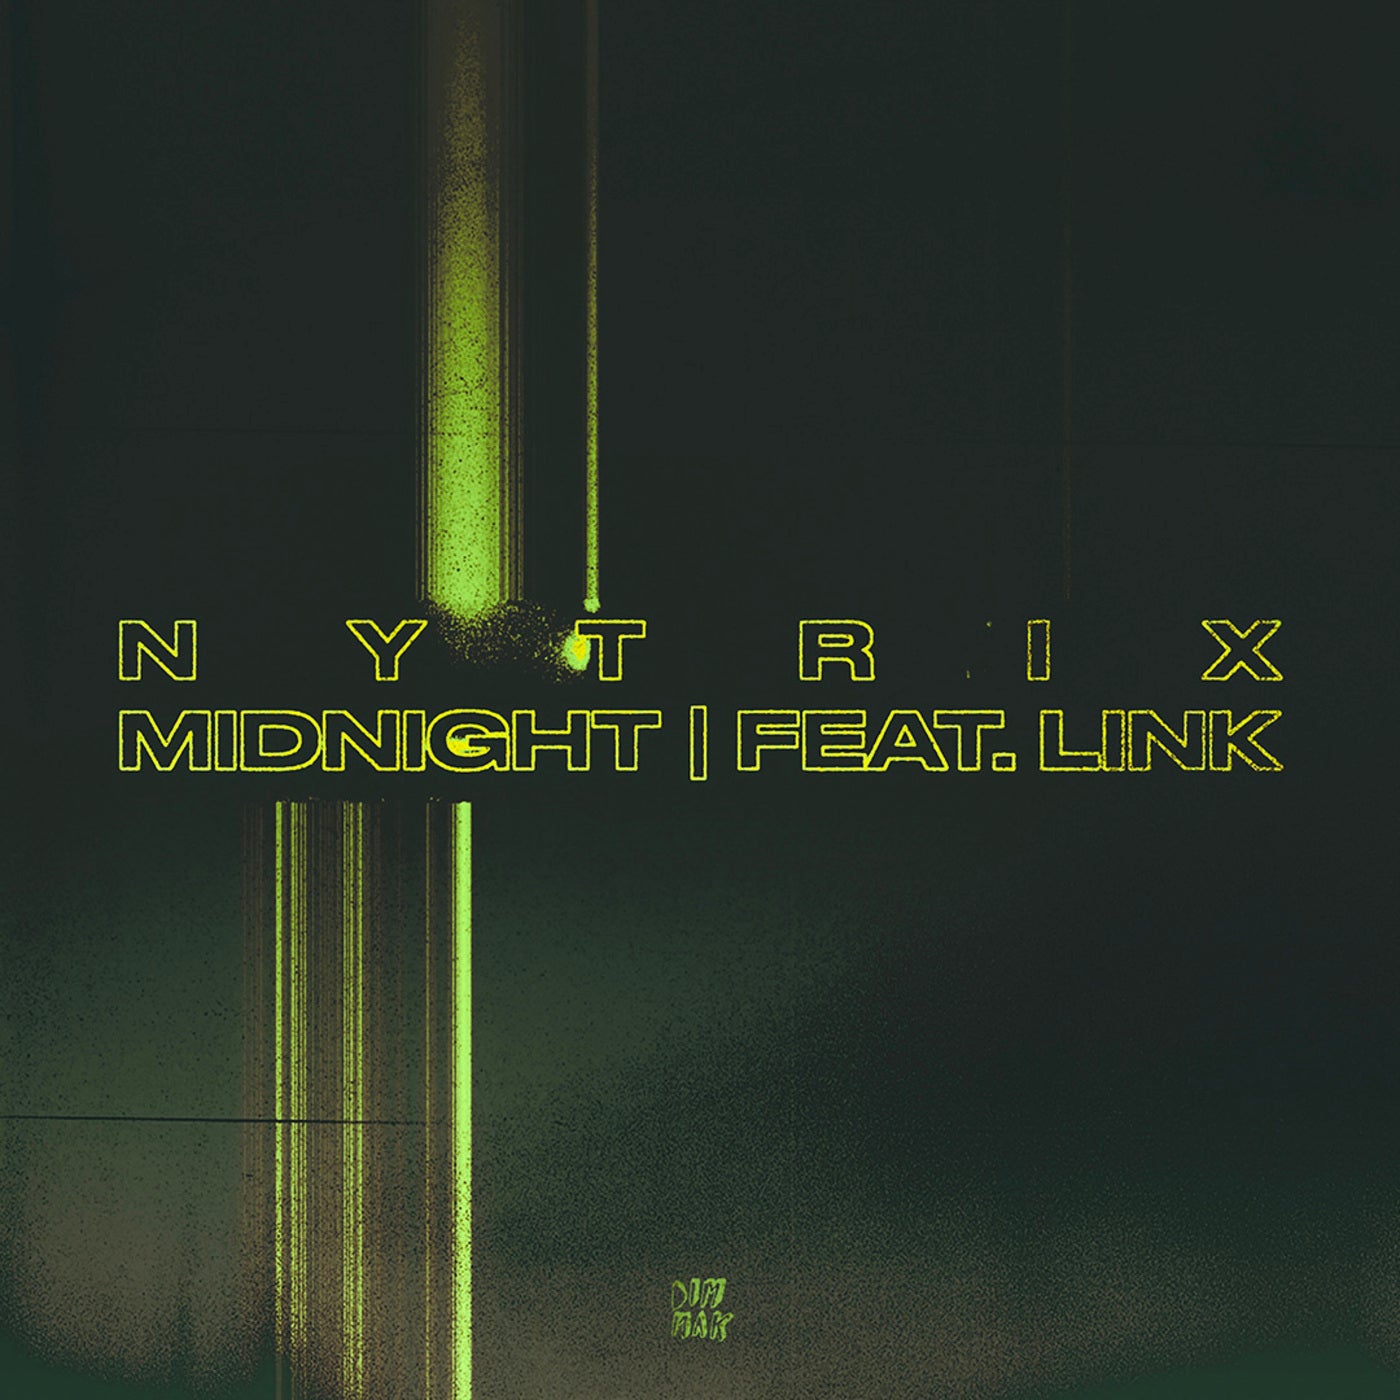 Midnight (feat. LINK)